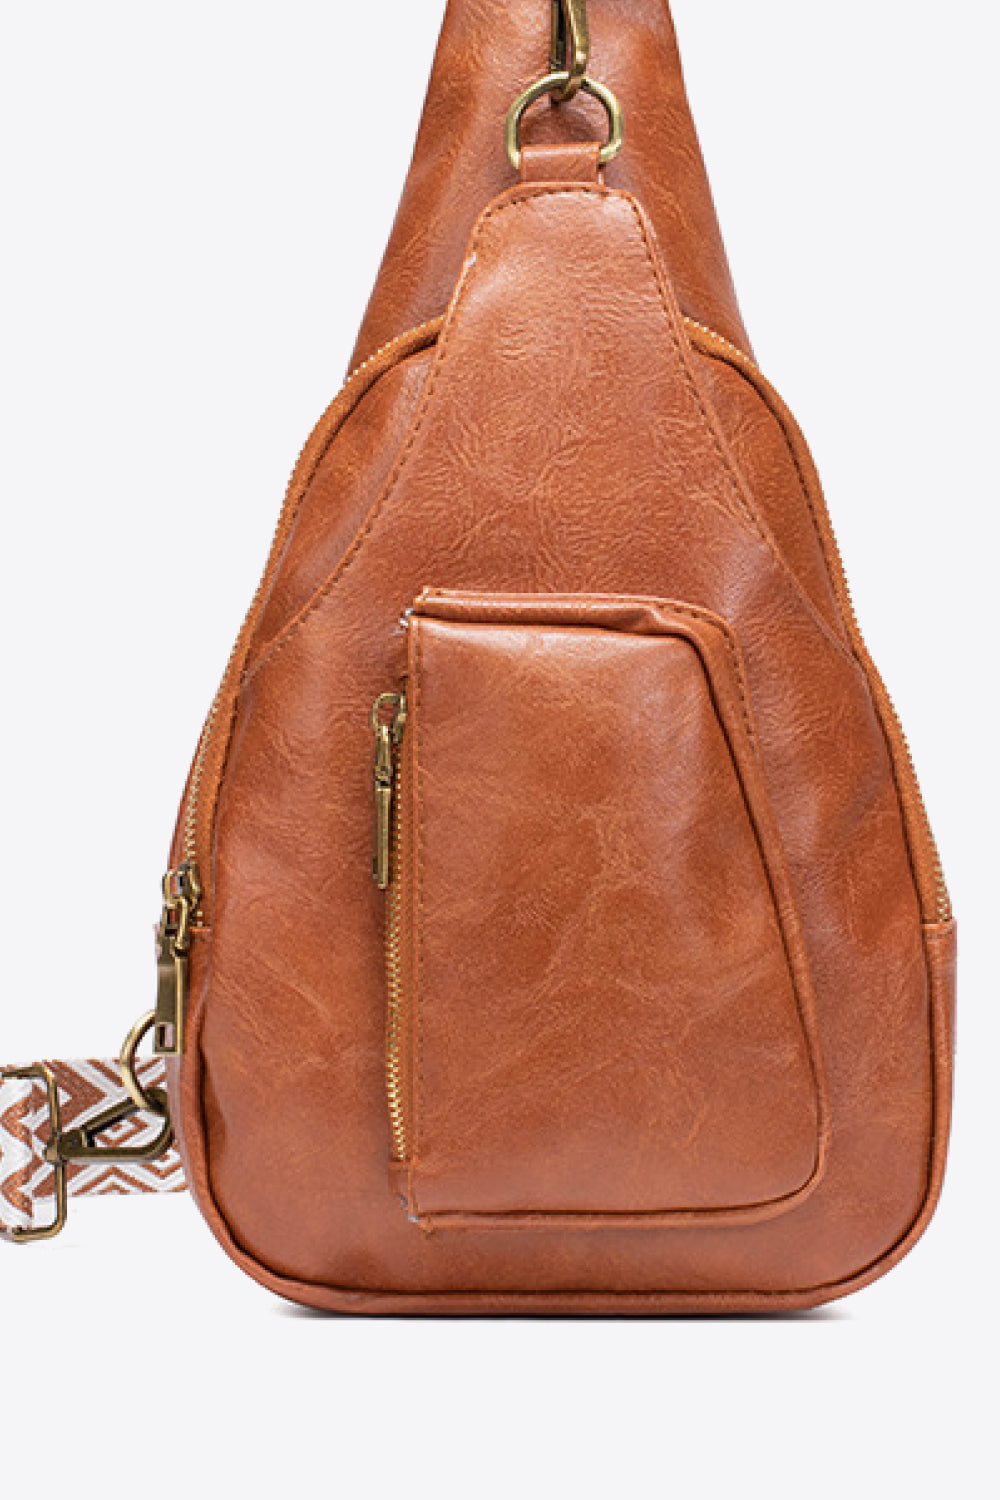 All The Feels PU Leather Sling Bag - Handbag - FITGGINS